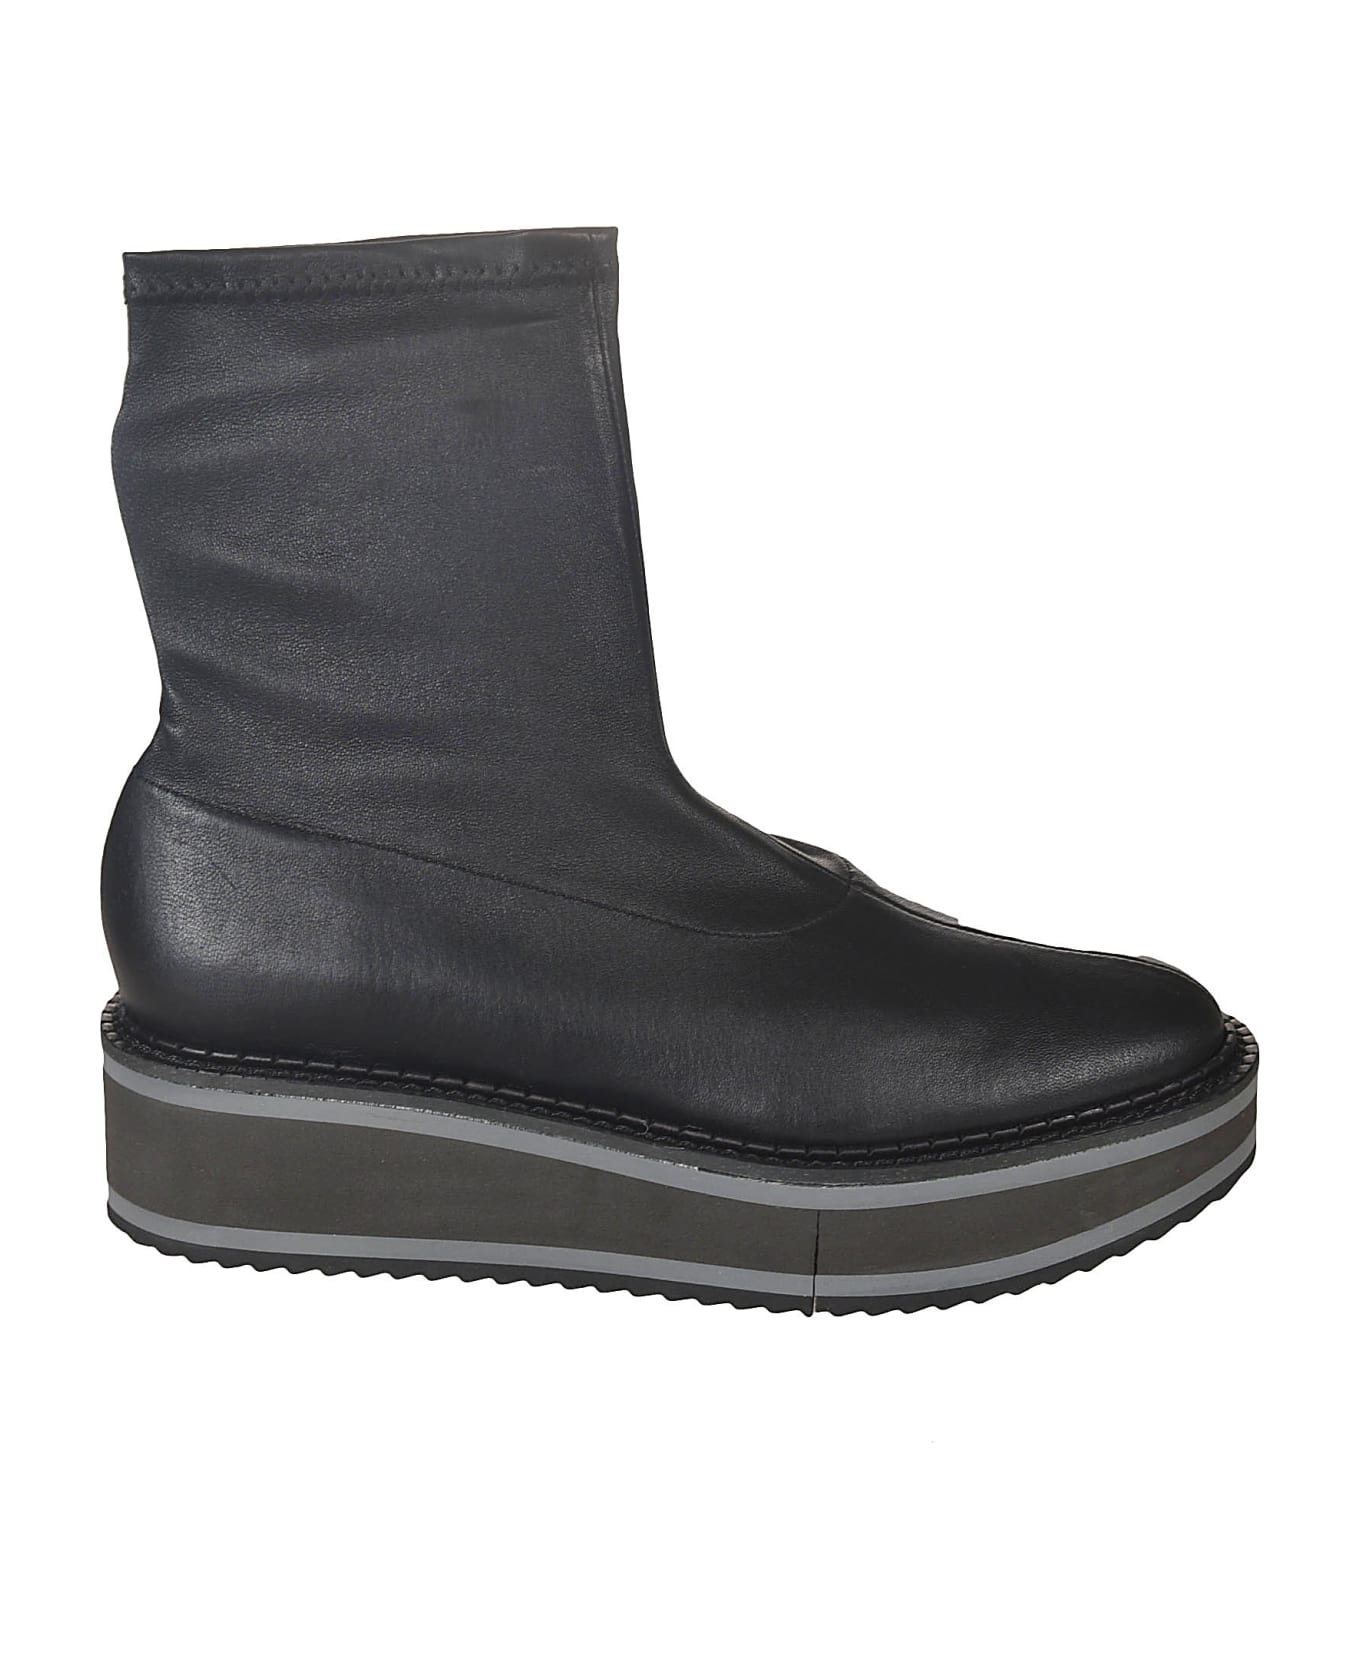 Clergerie Berta Wedge Boots - Black ブーツ